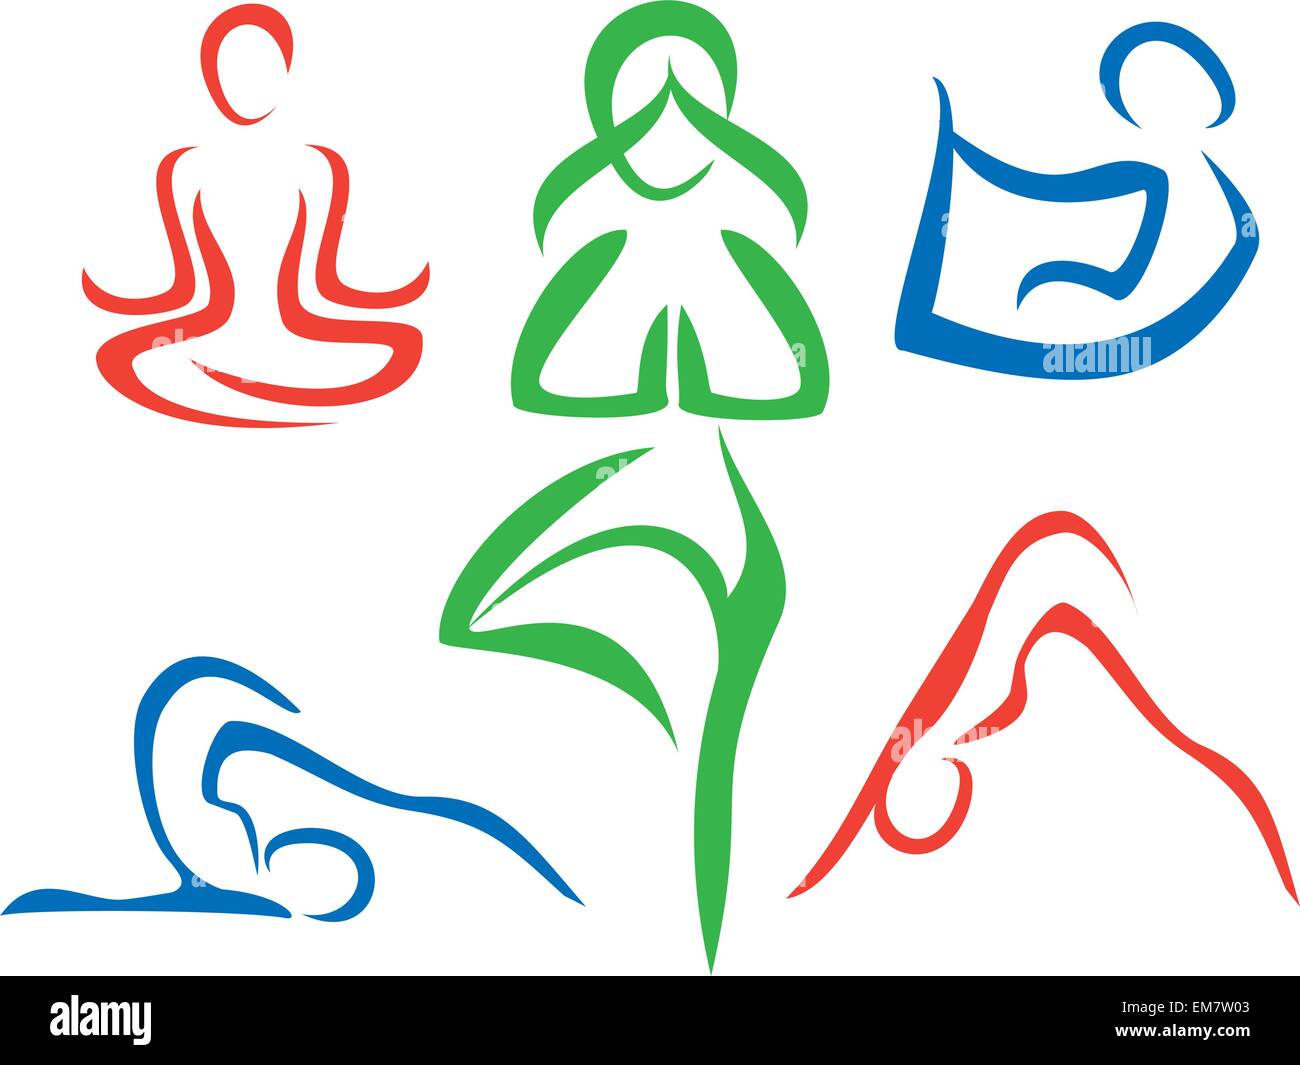 Yoga poses symbols set 3 Stock Vector